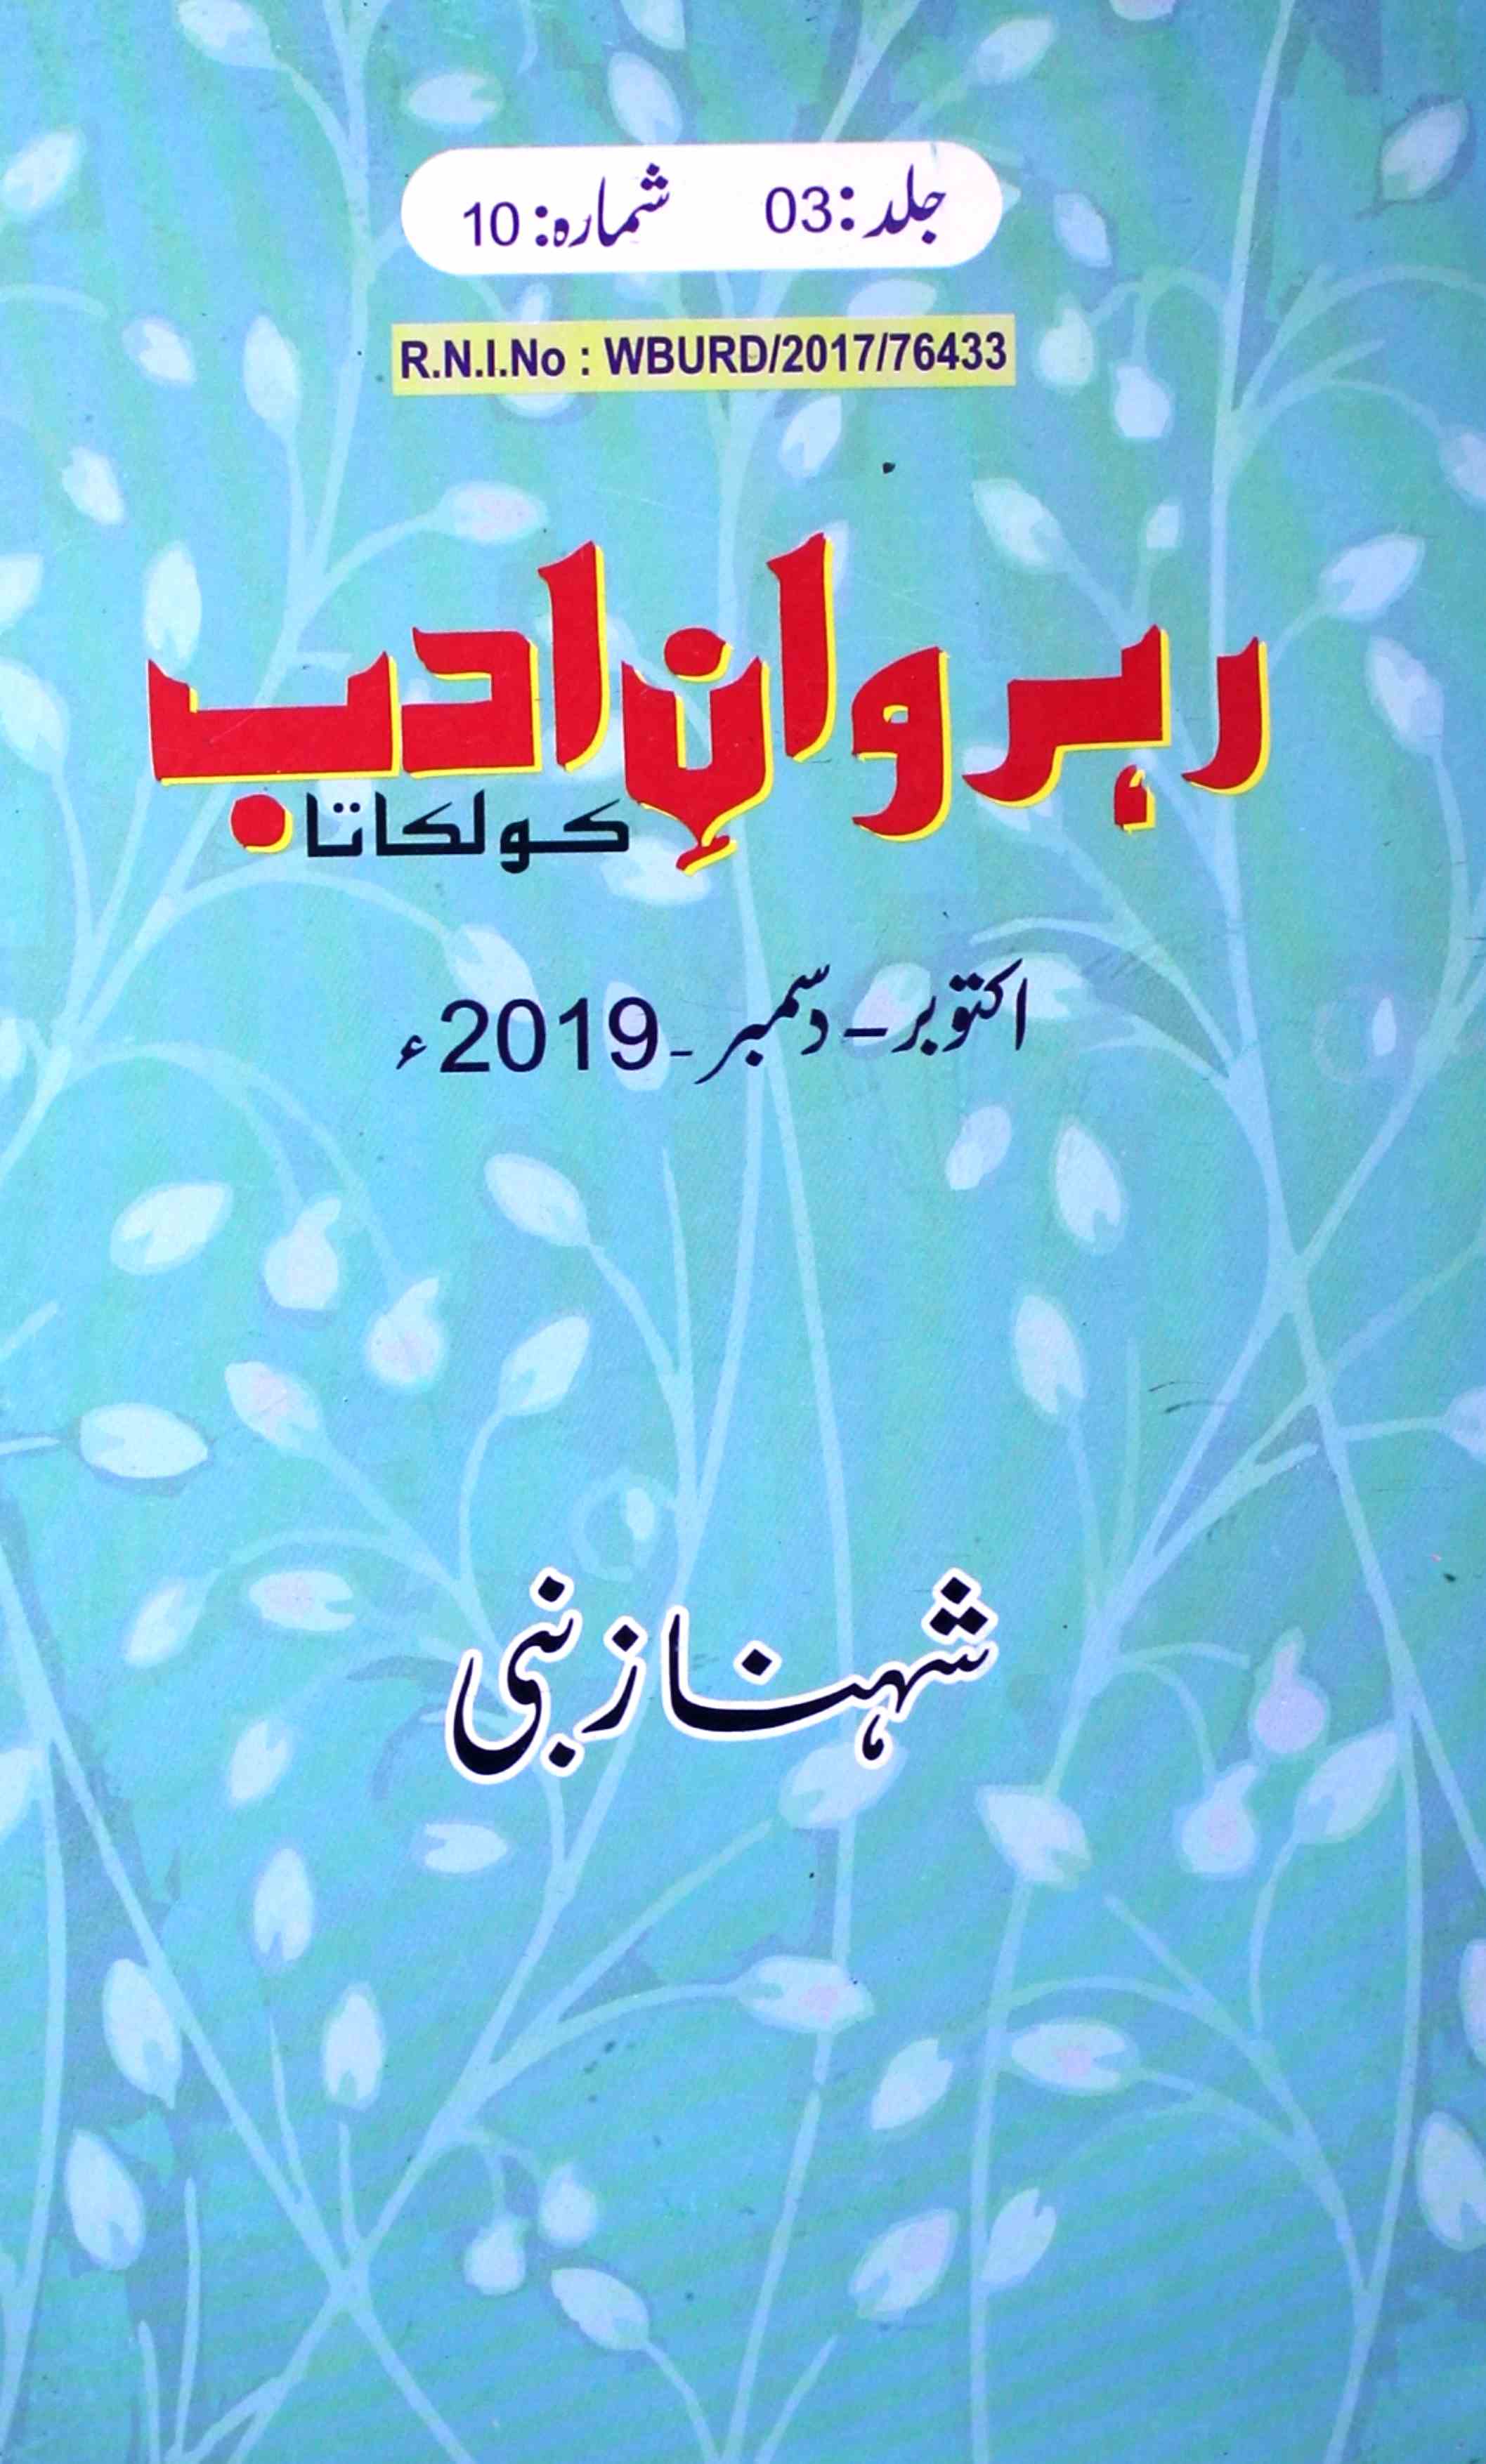 rahrawan-e-adab jild-3 shumara-10